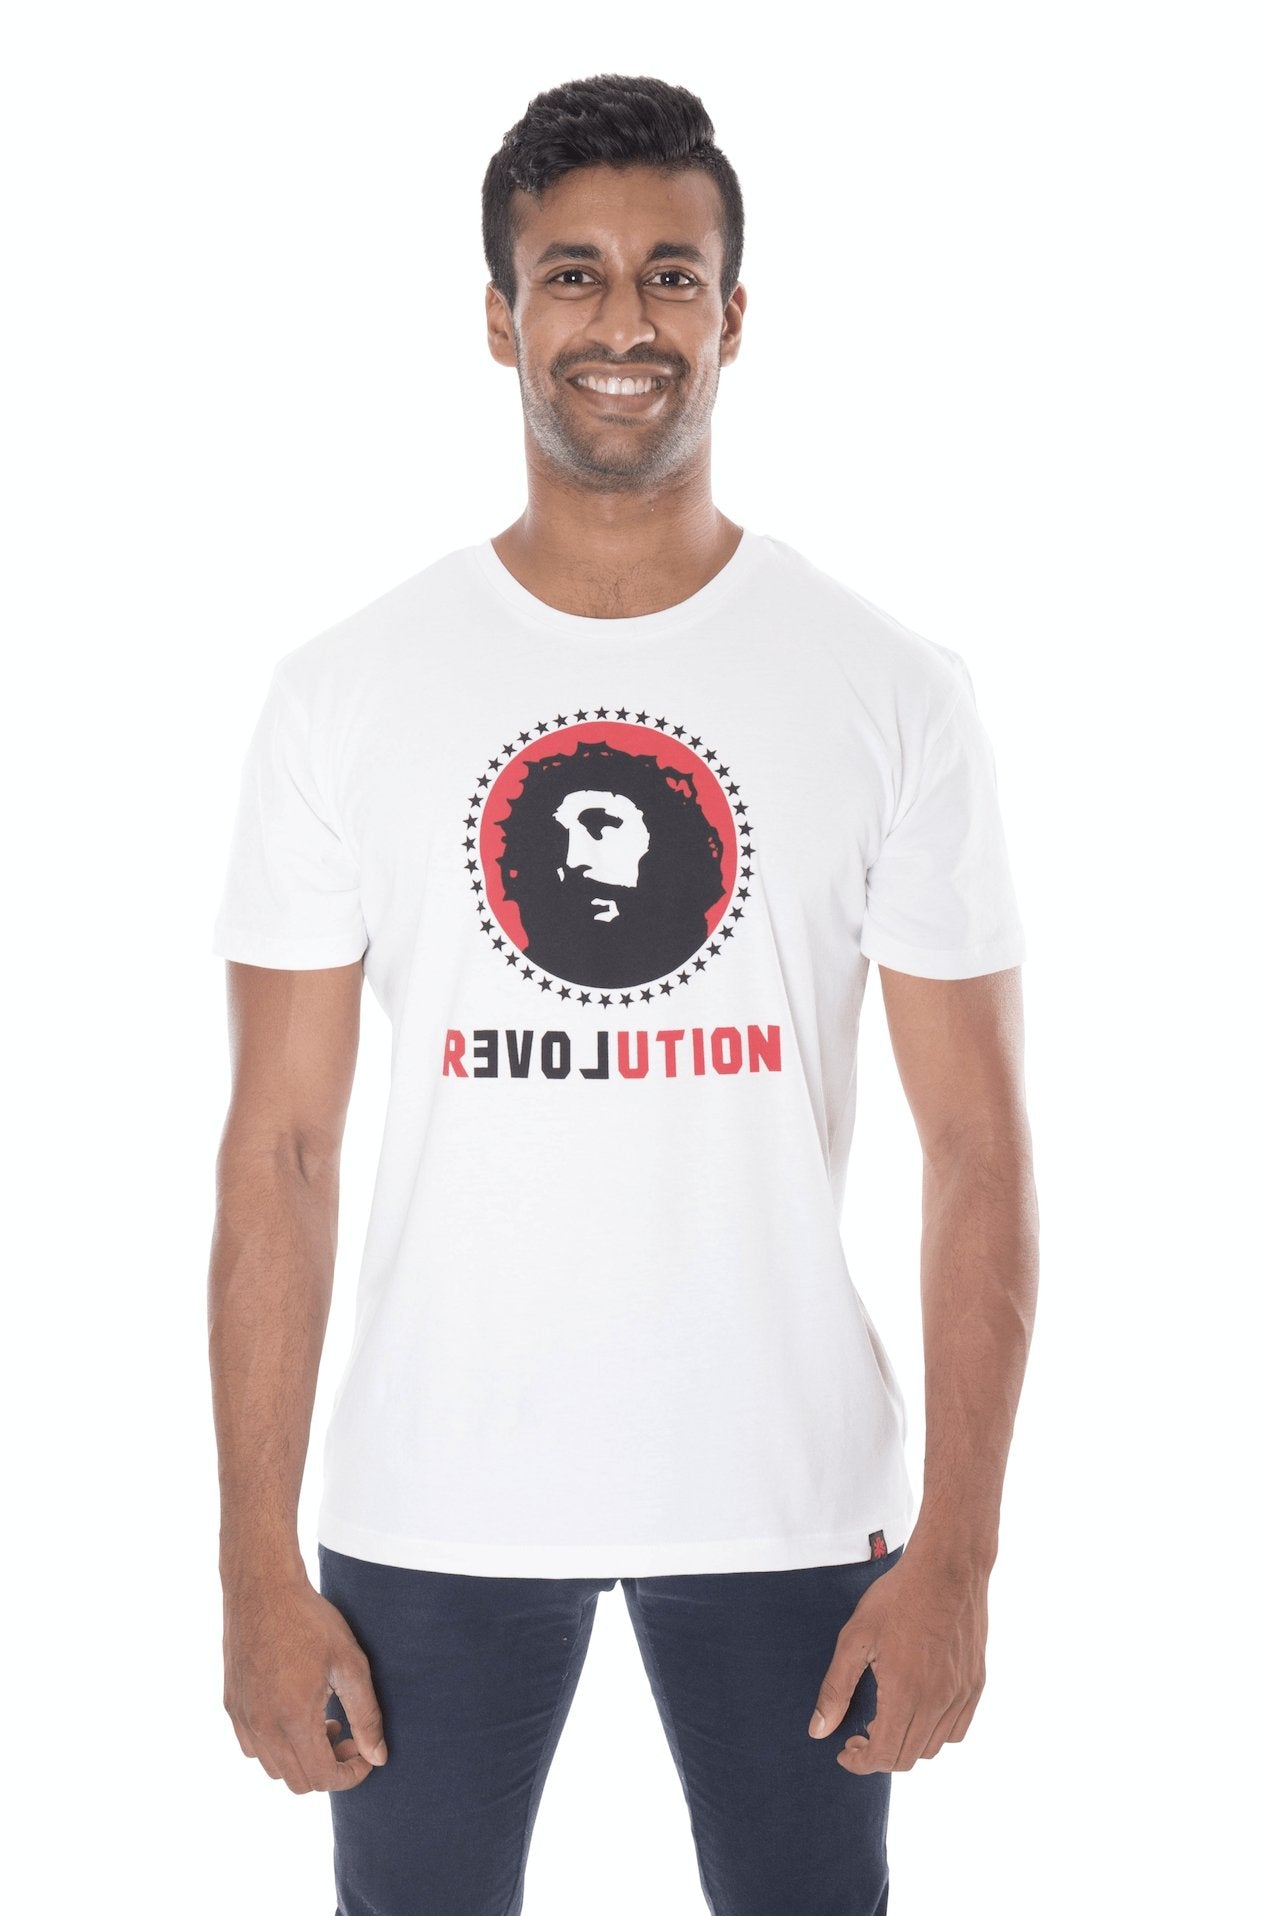 Love Revolution white t-shirt - unisex organic fairtrade-Etiko-stride